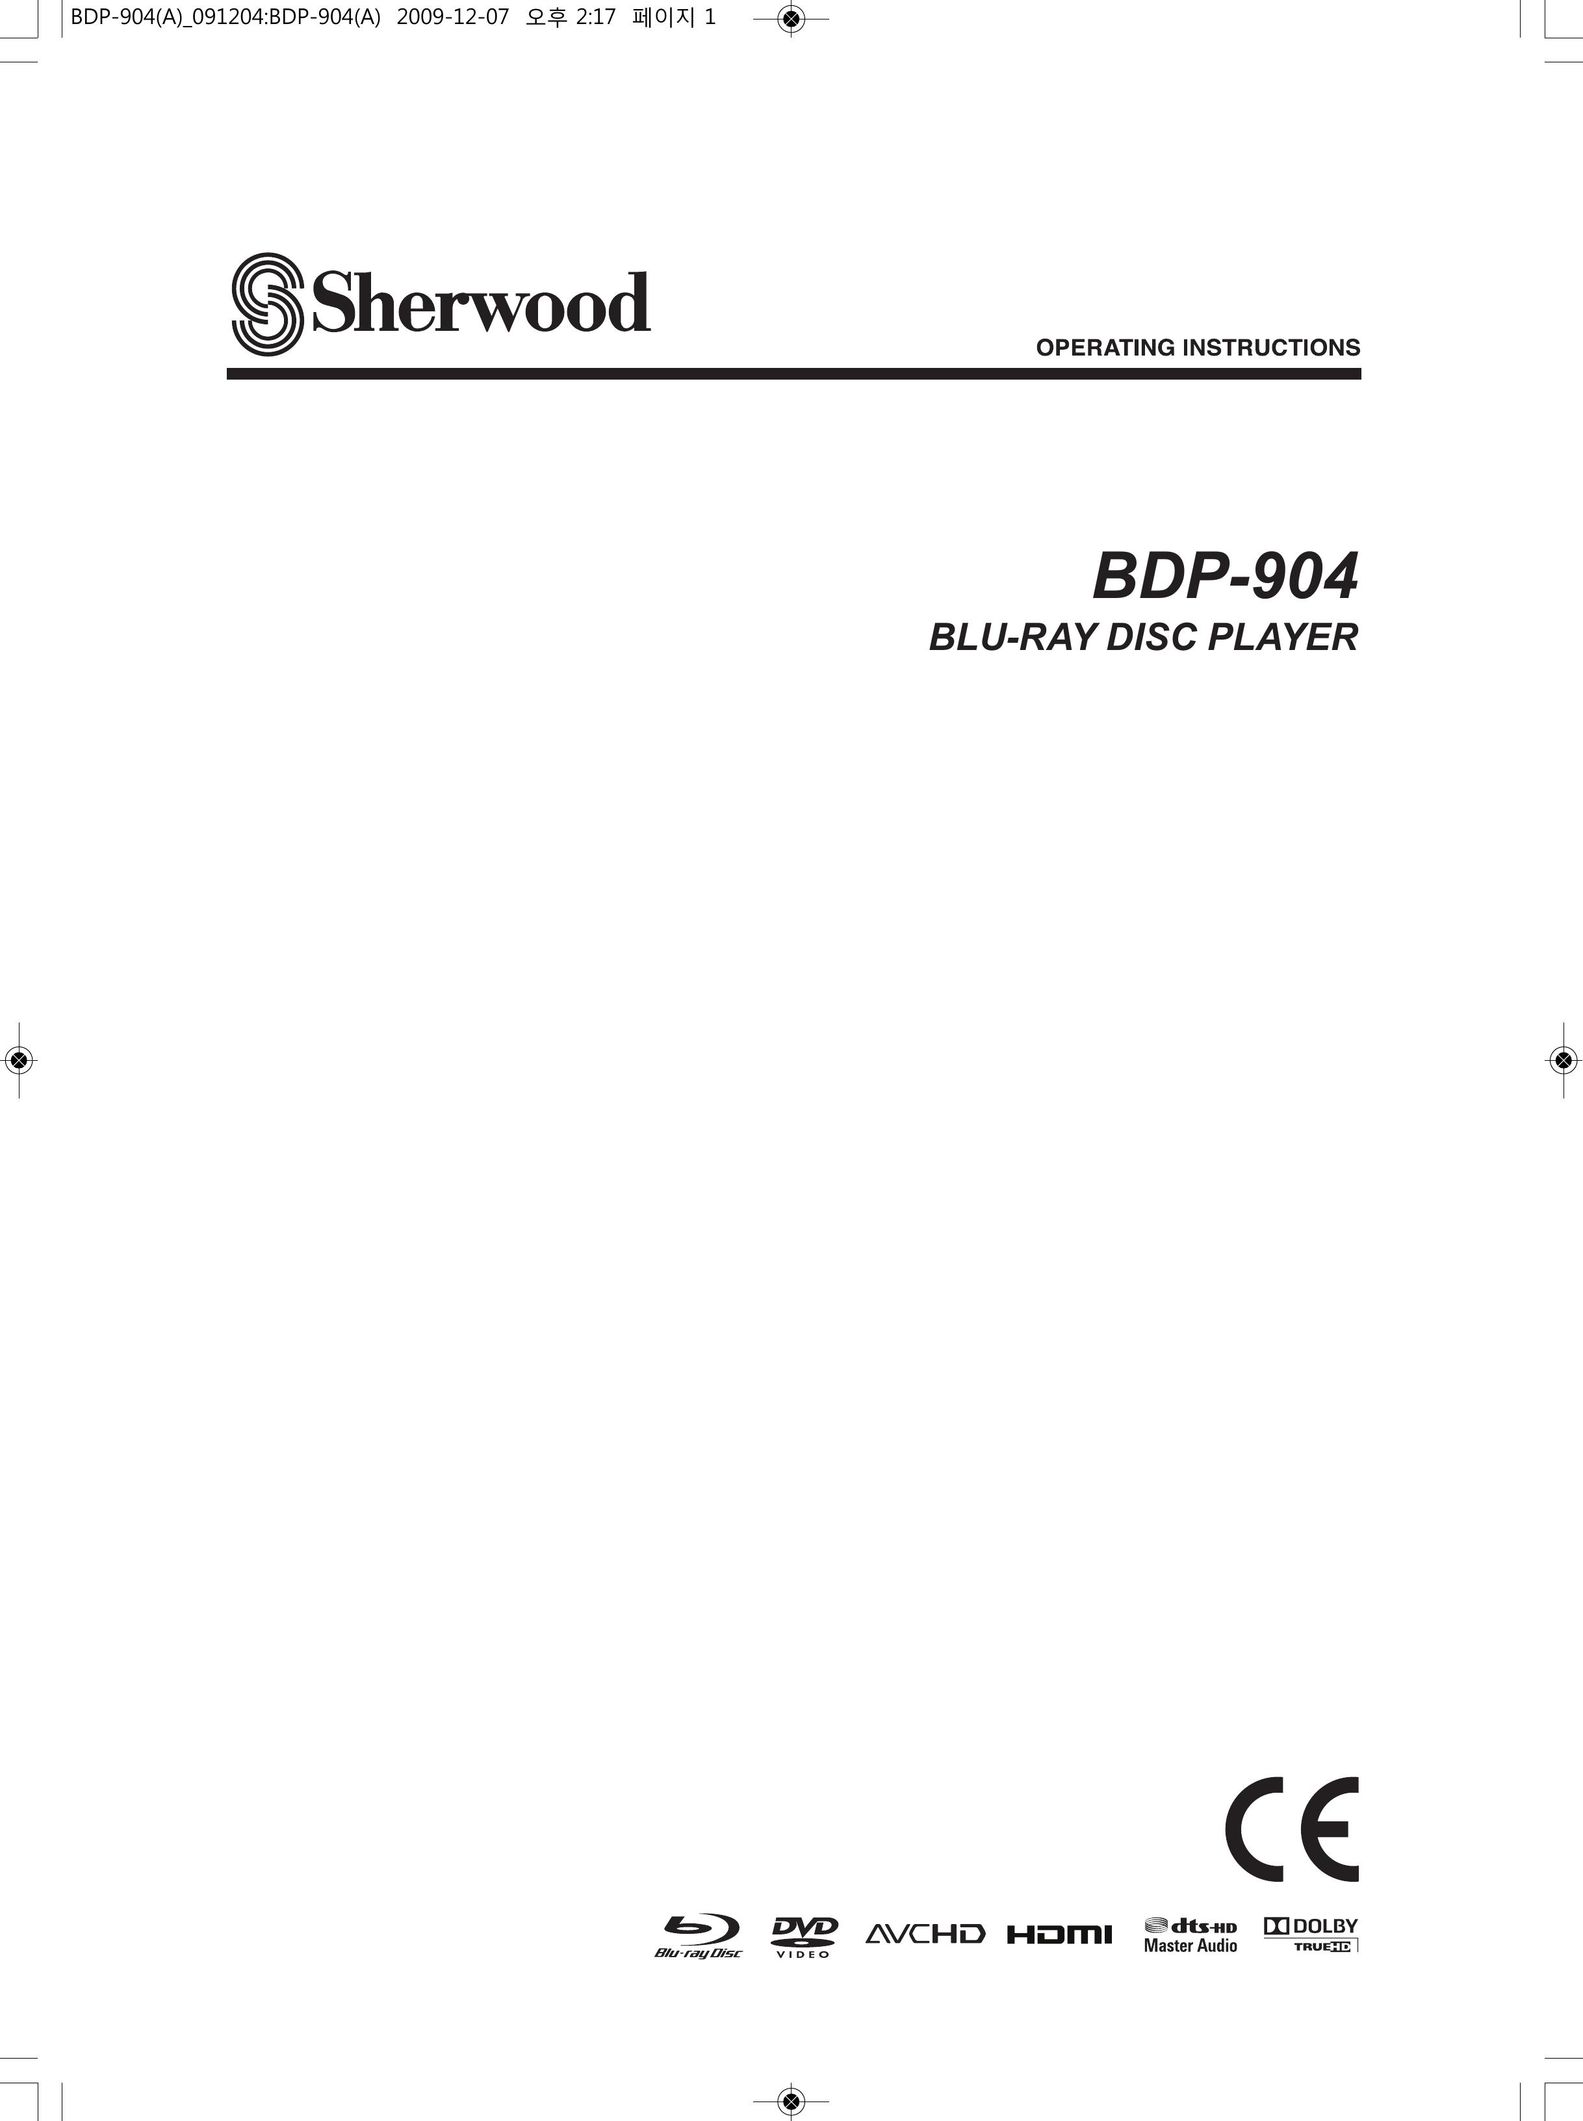 Sherwood BDP-904 Blu-ray Player User Manual